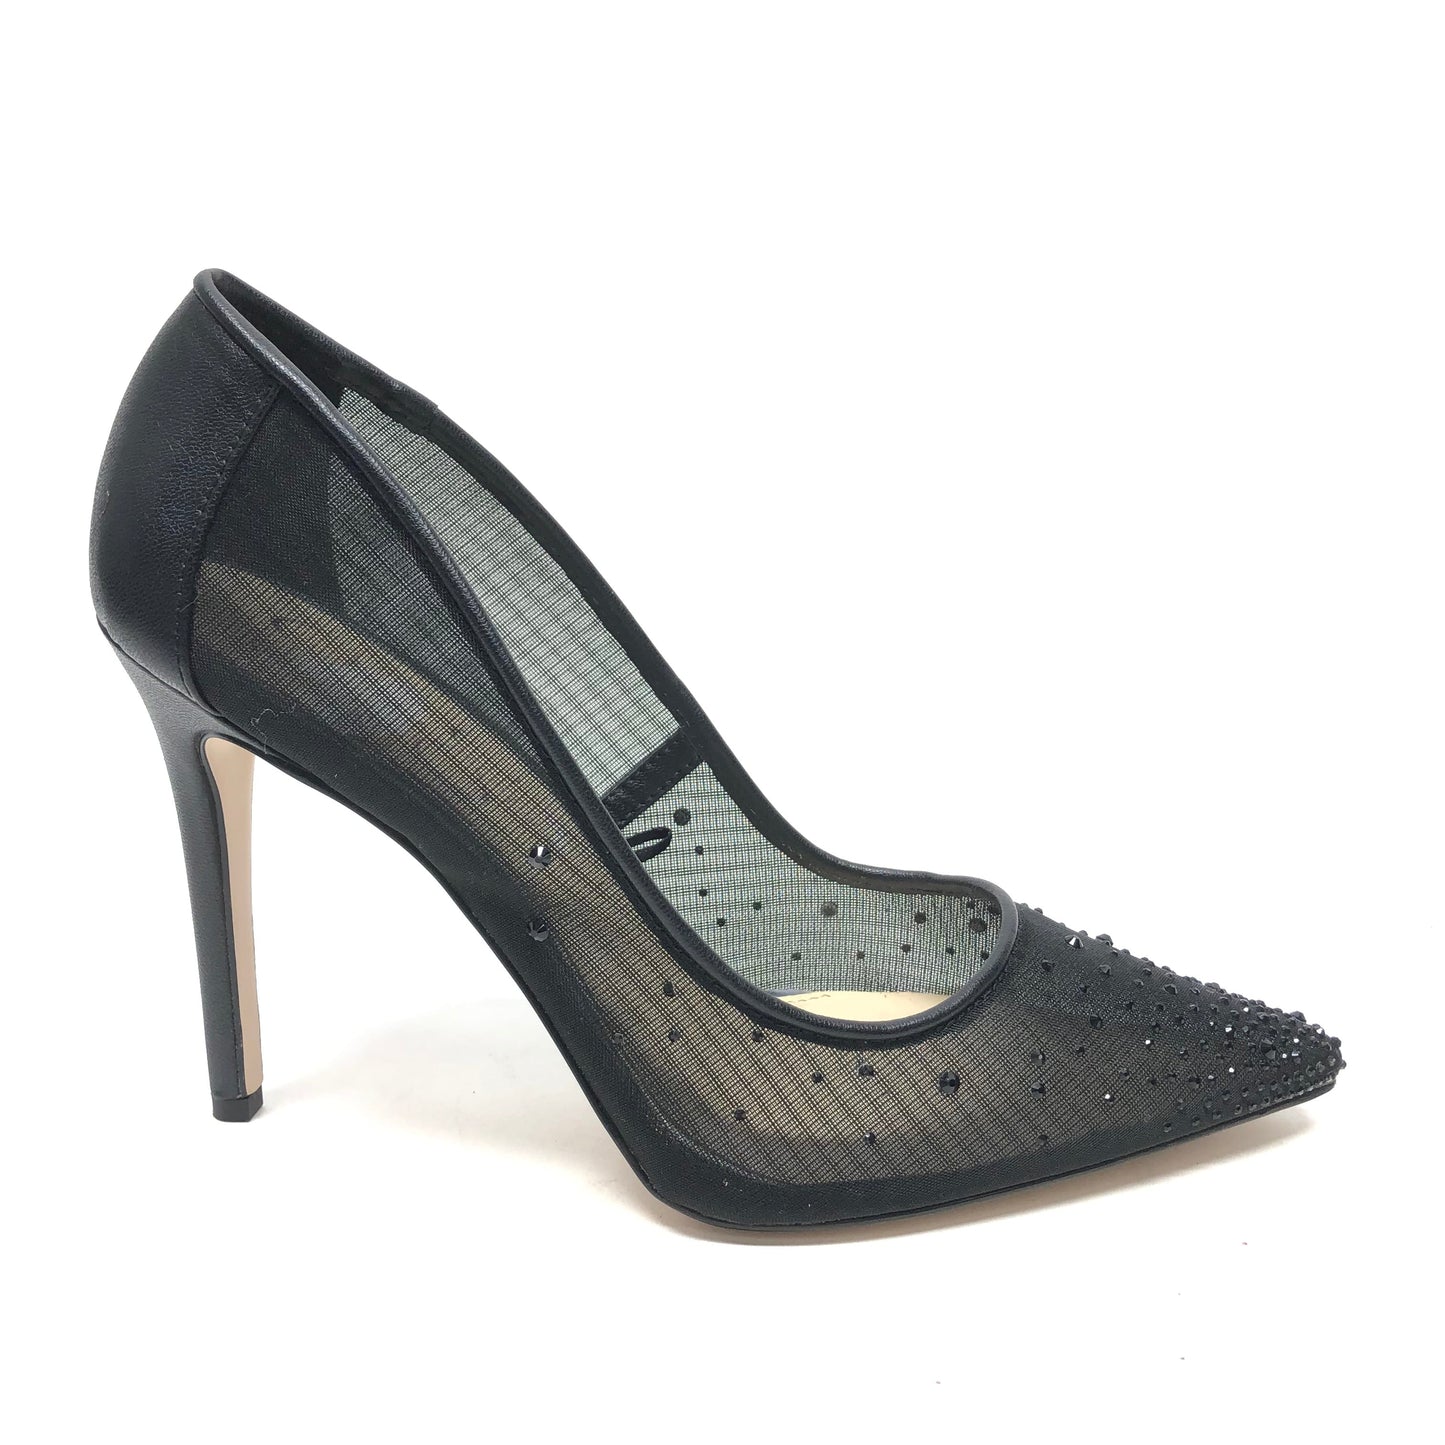 Black Shoes Heels Stiletto Jessica Simpson, Size 8.5